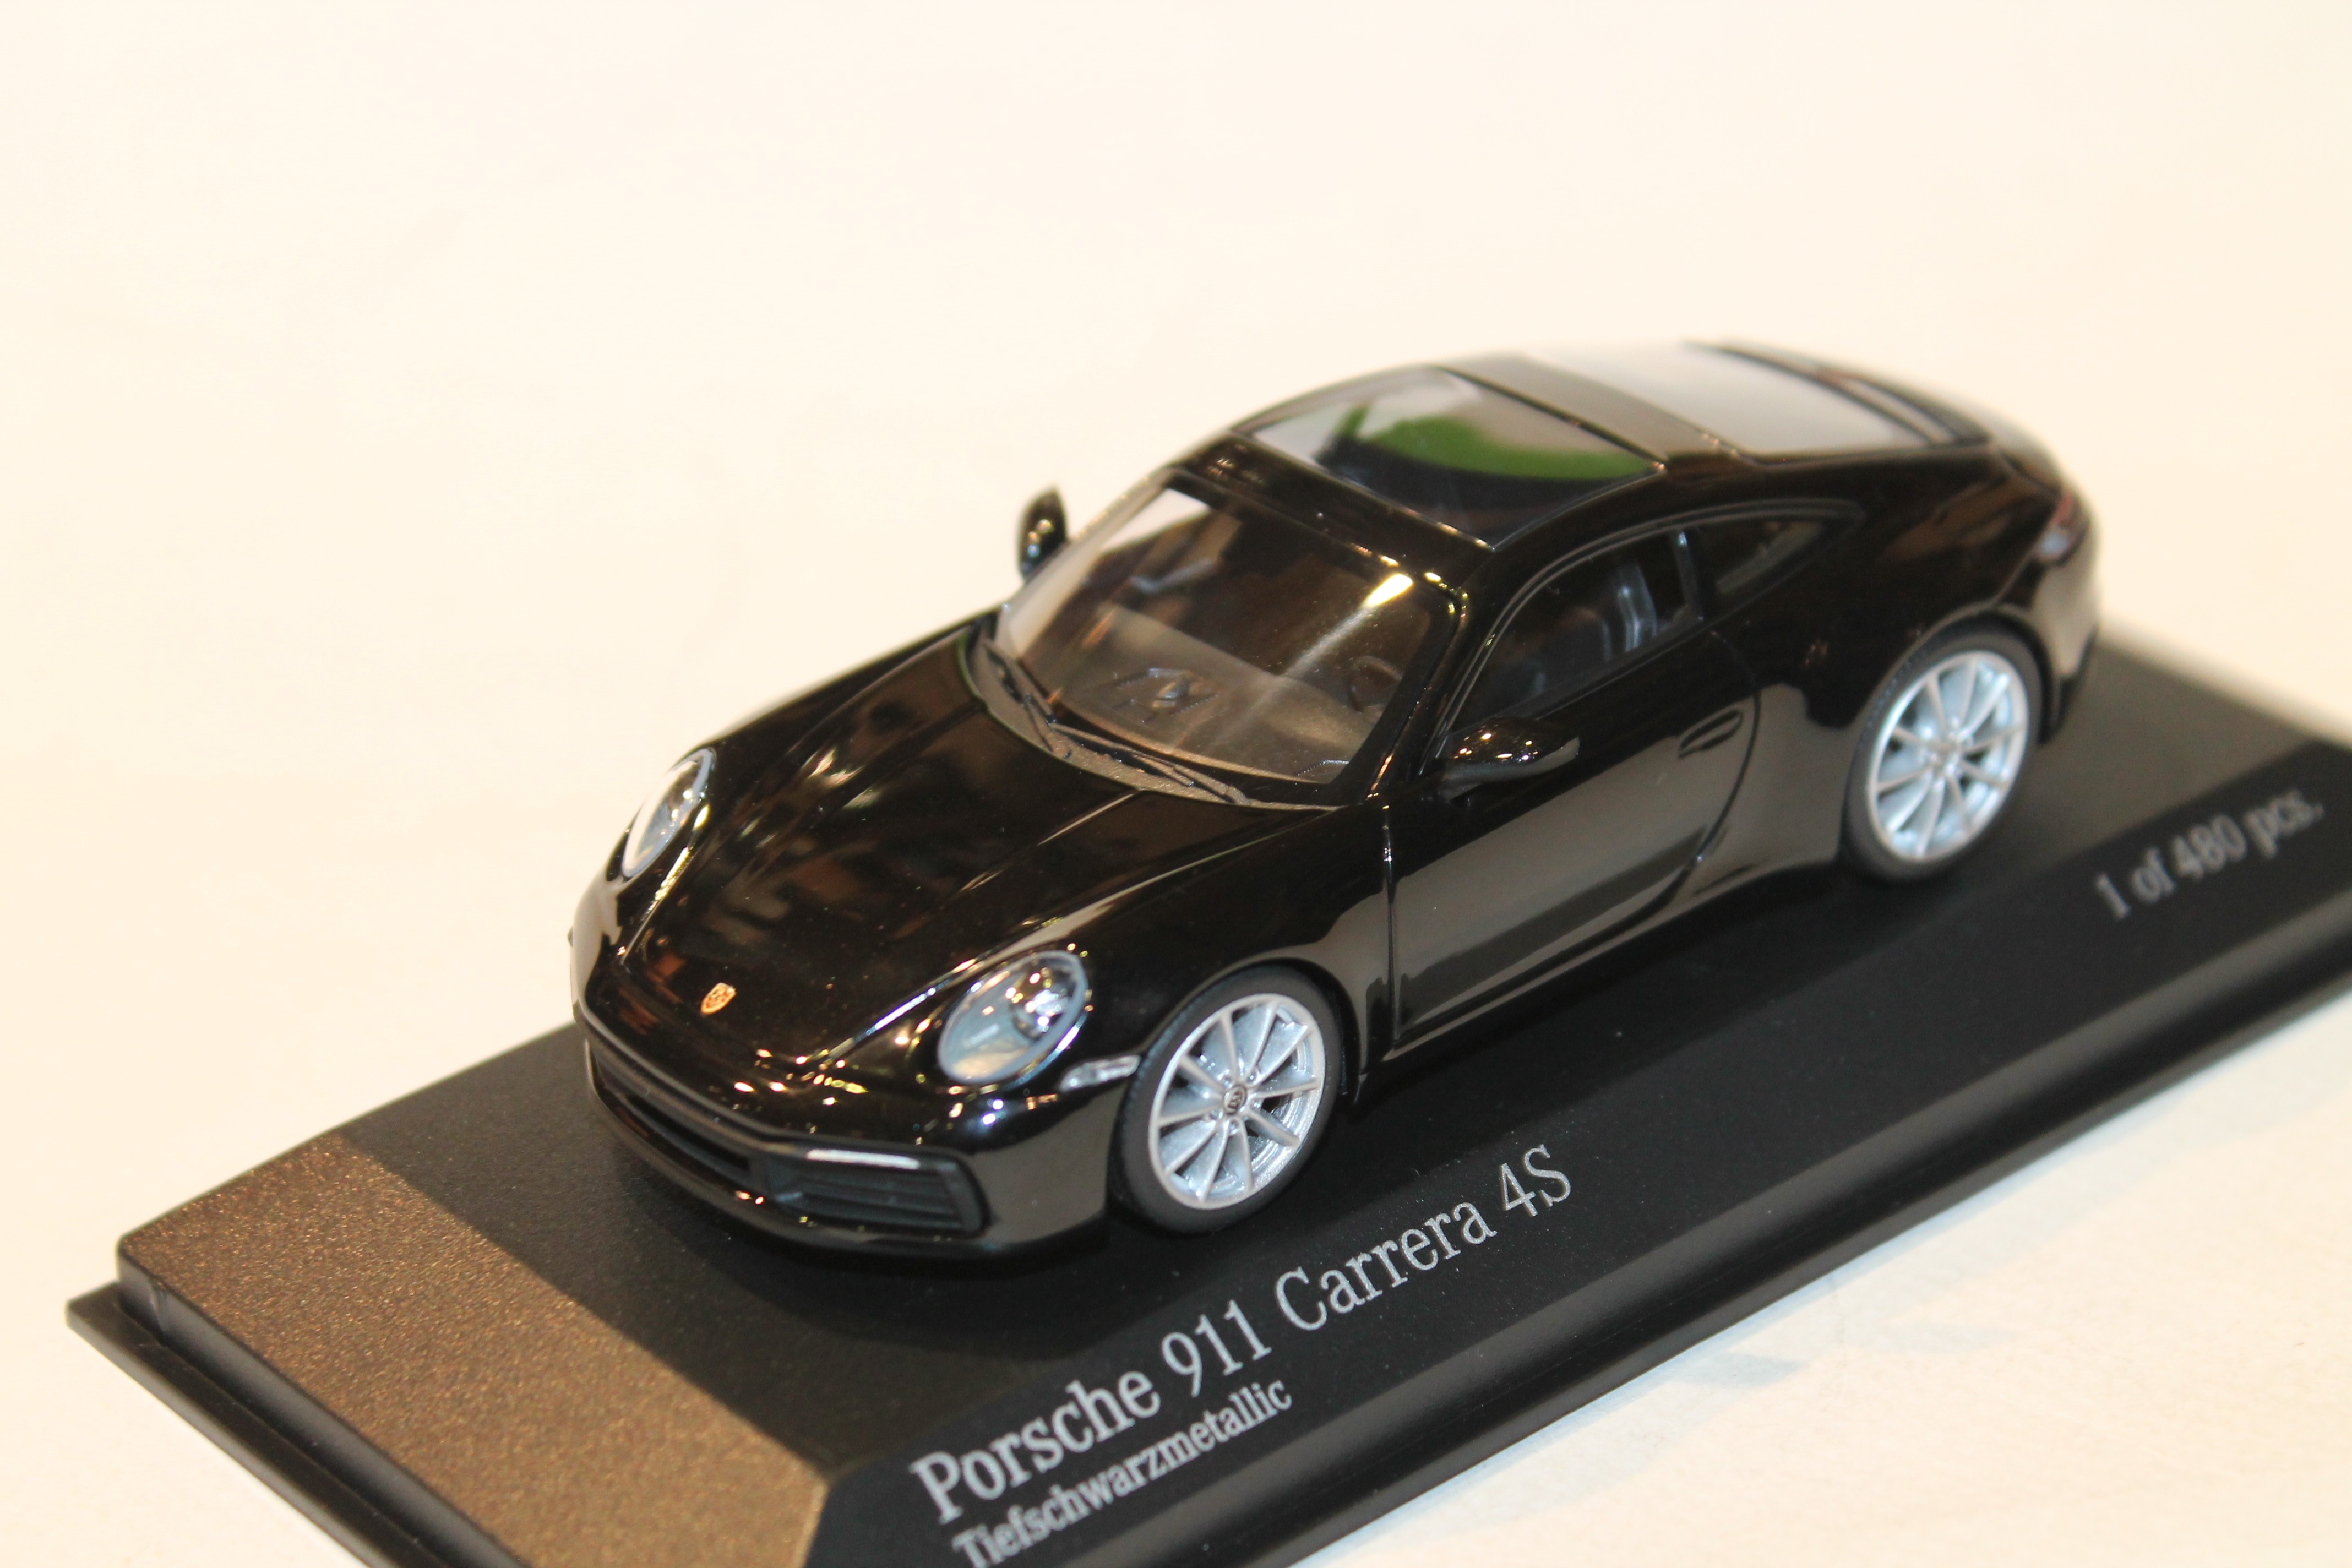 Porsche Carrera 4s Miniature